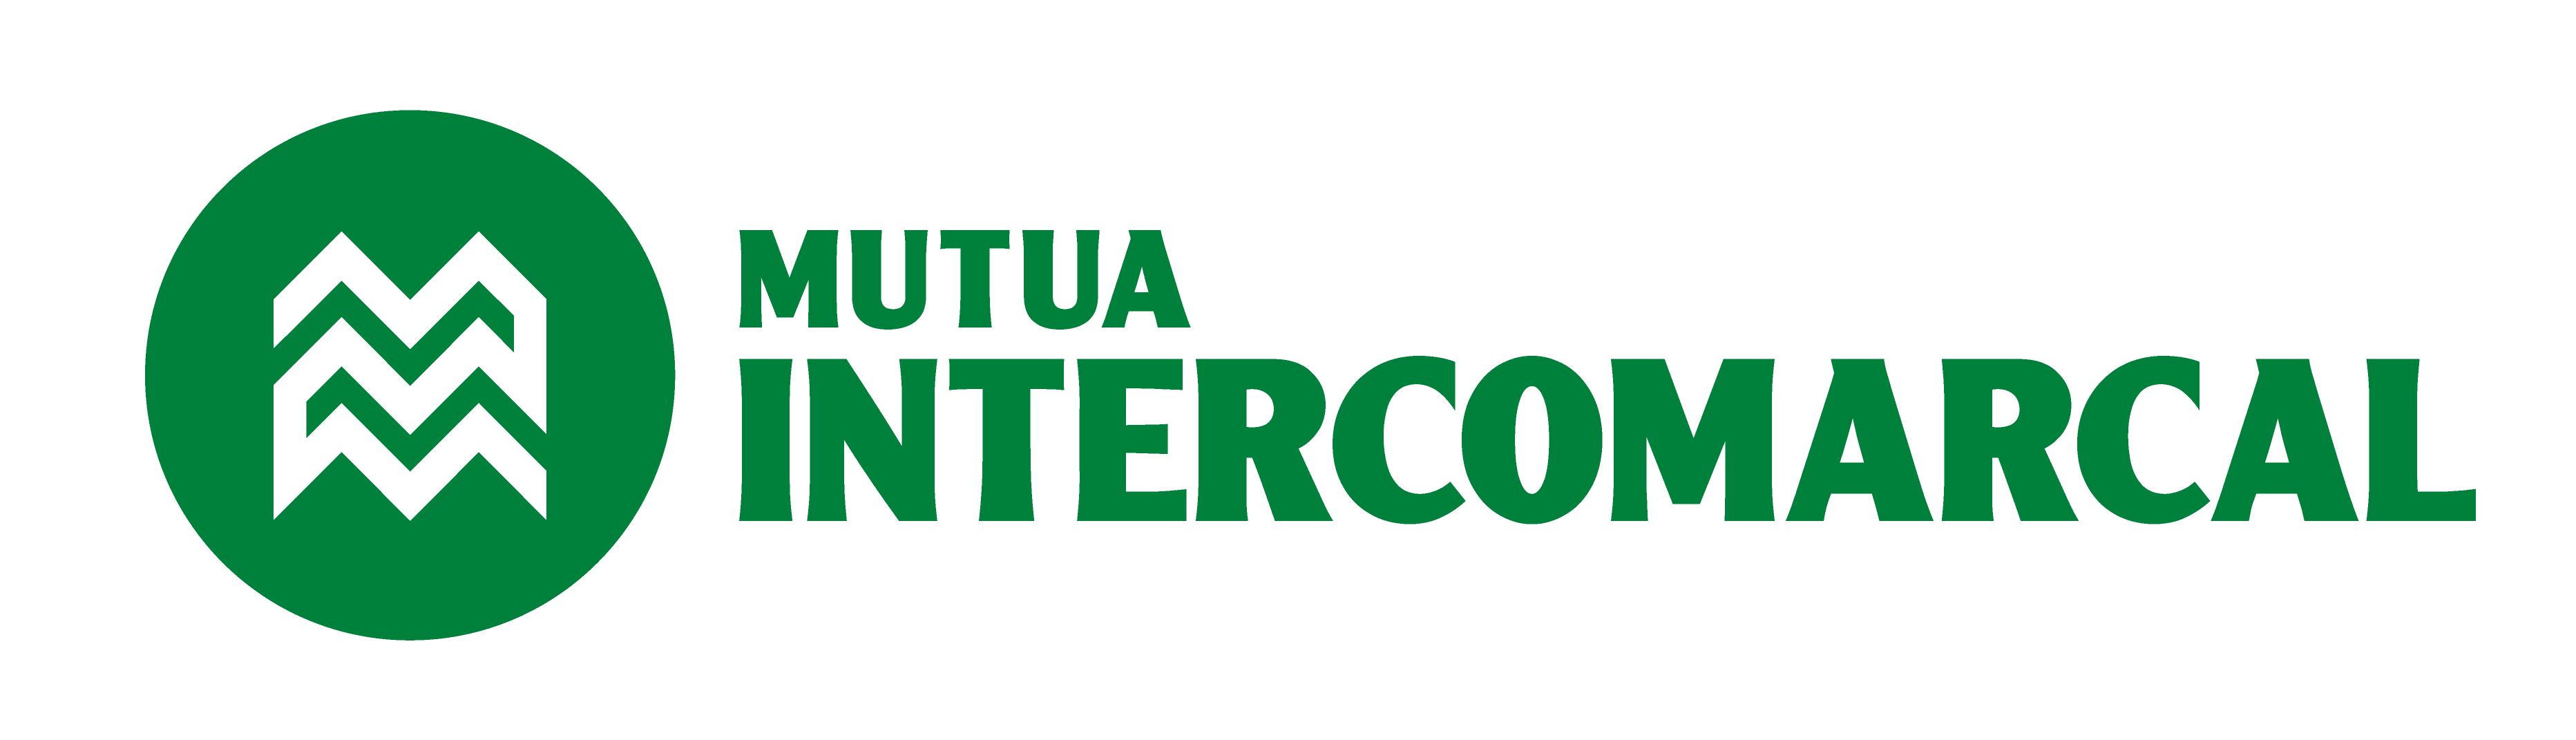 mutua_interc.png